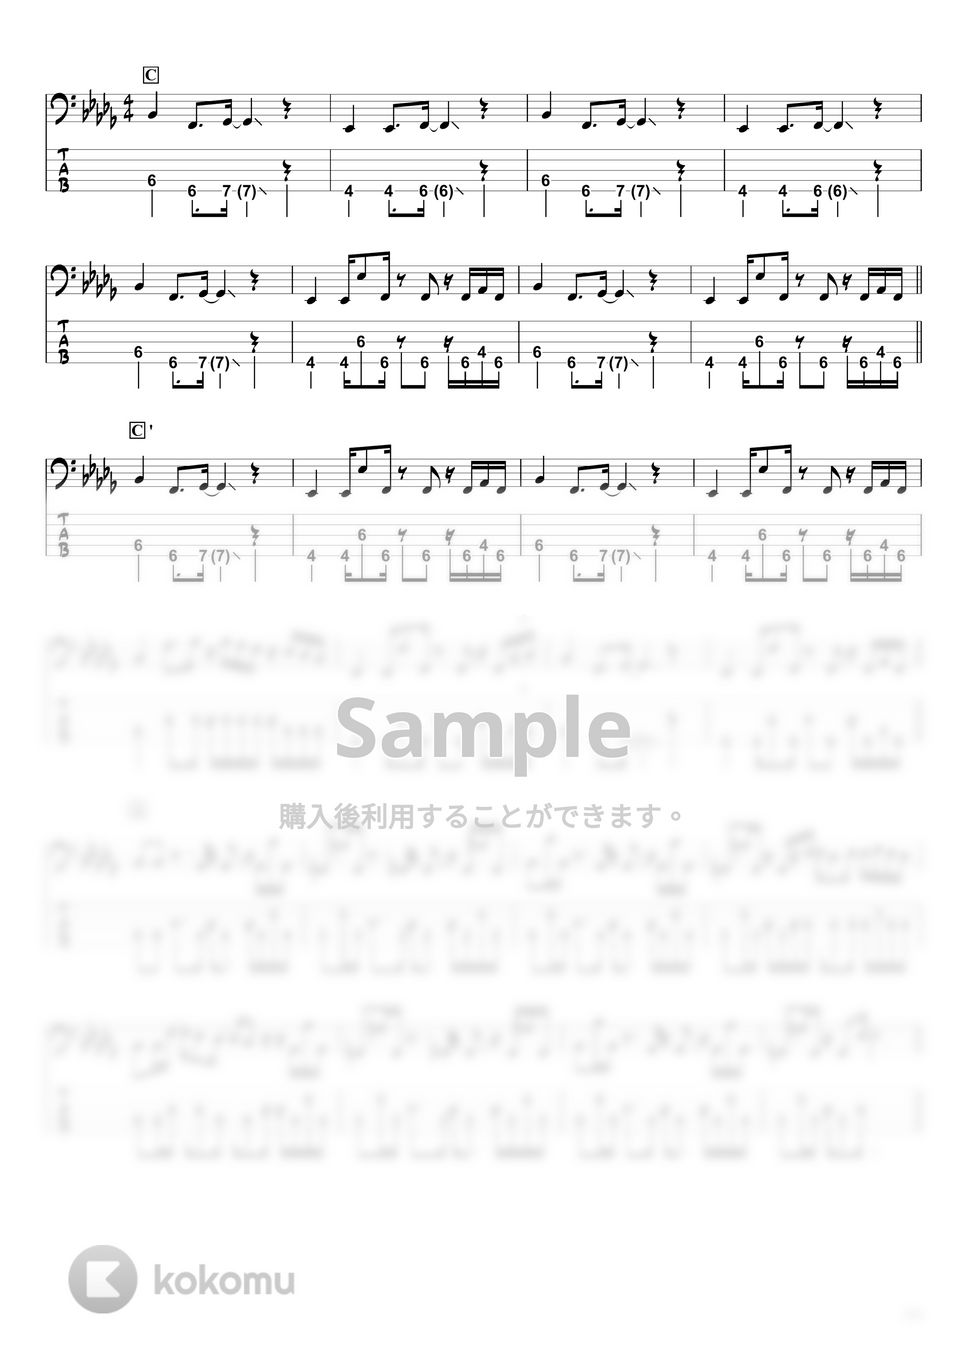 millennium parade × 椎名林檎 - Ｗ●ＲＫ (ベースTAB譜☆5弦ベース対応) by swbass